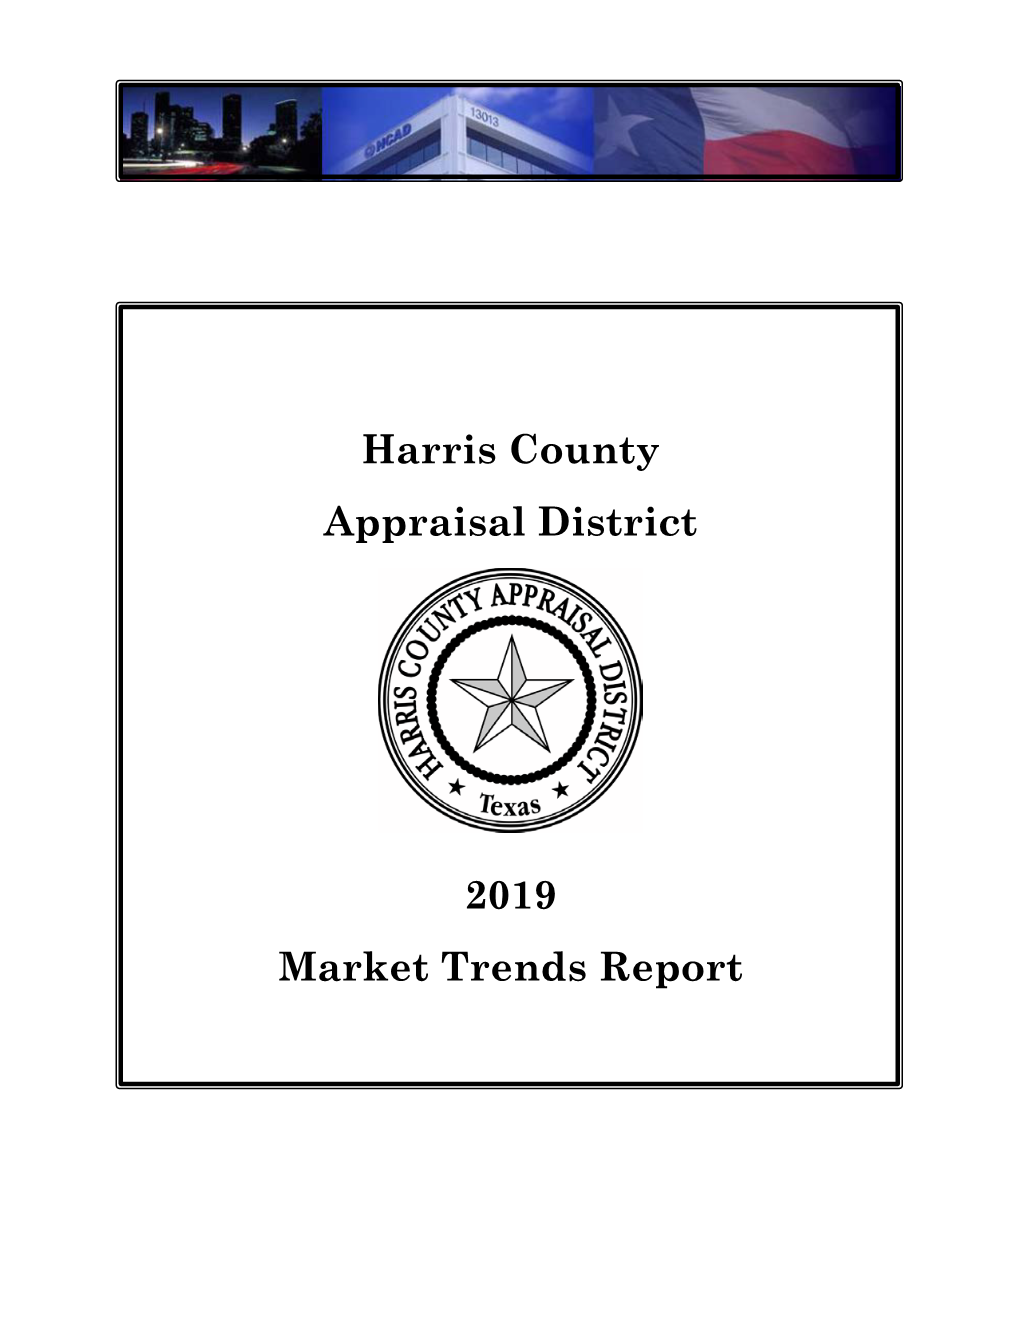 Harris County Appraisal District 2019 Market Trends Report